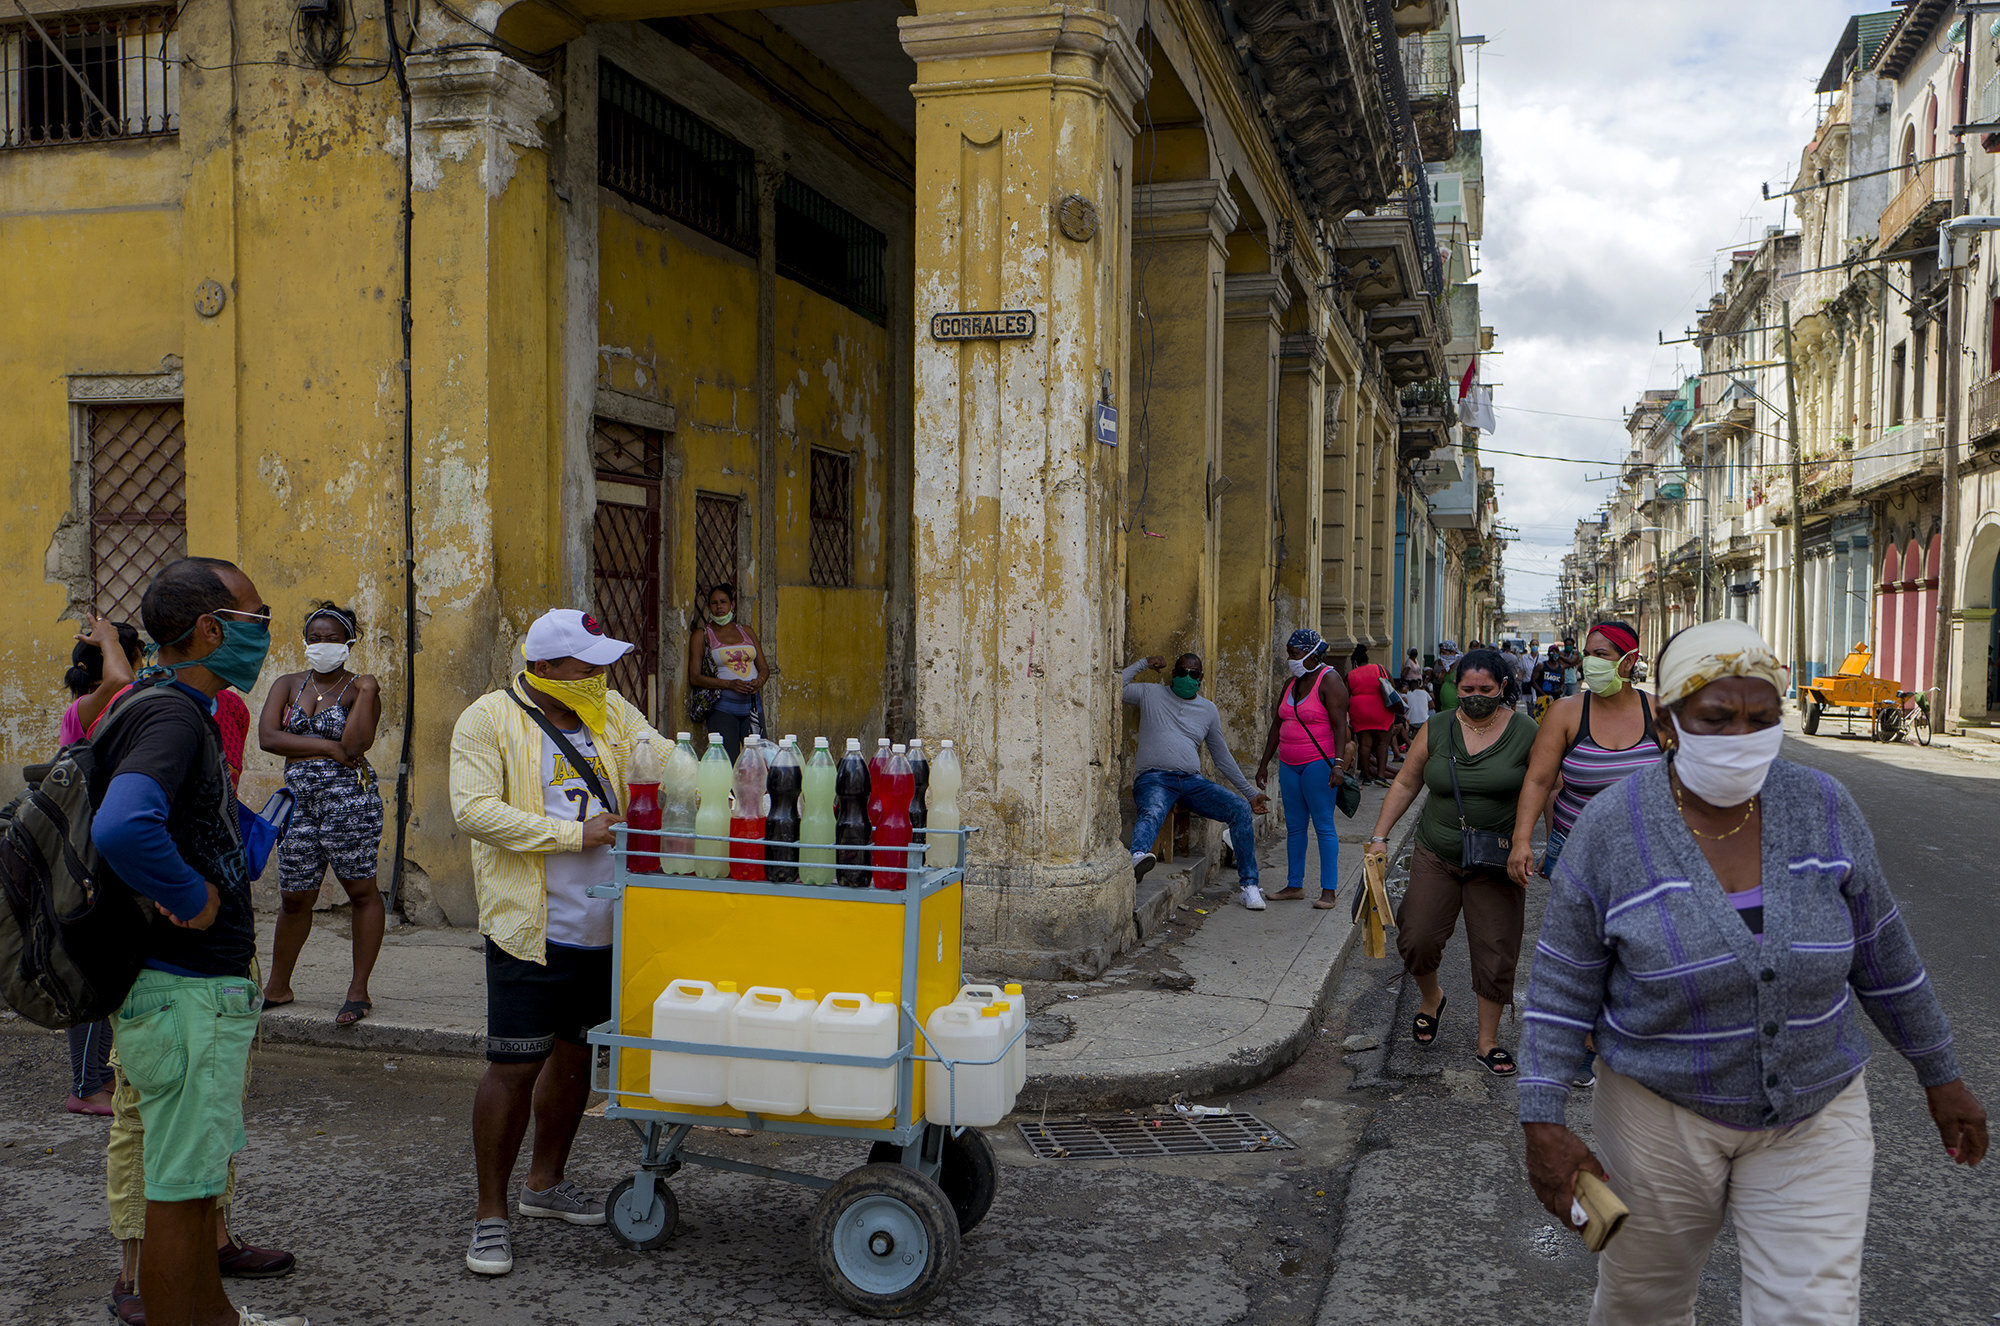  Cubanos caminan en bsqueda de comida mientras un vendedor de refresco espera por compradores.  